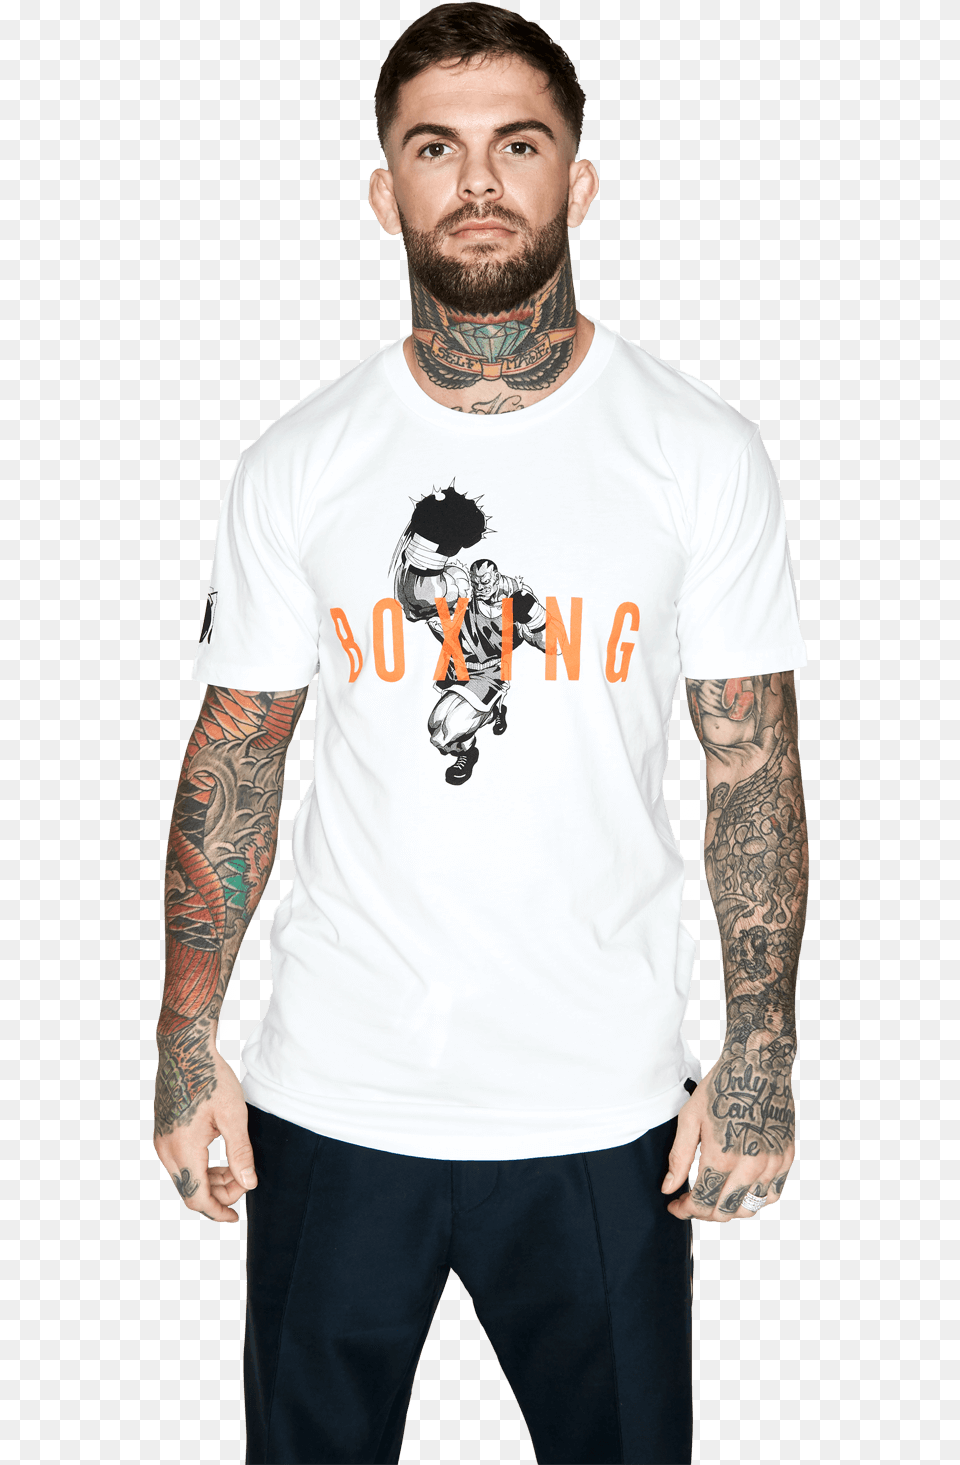 Img Balrog Street Fighter Shirt, Tattoo, T-shirt, Skin, Person Free Png